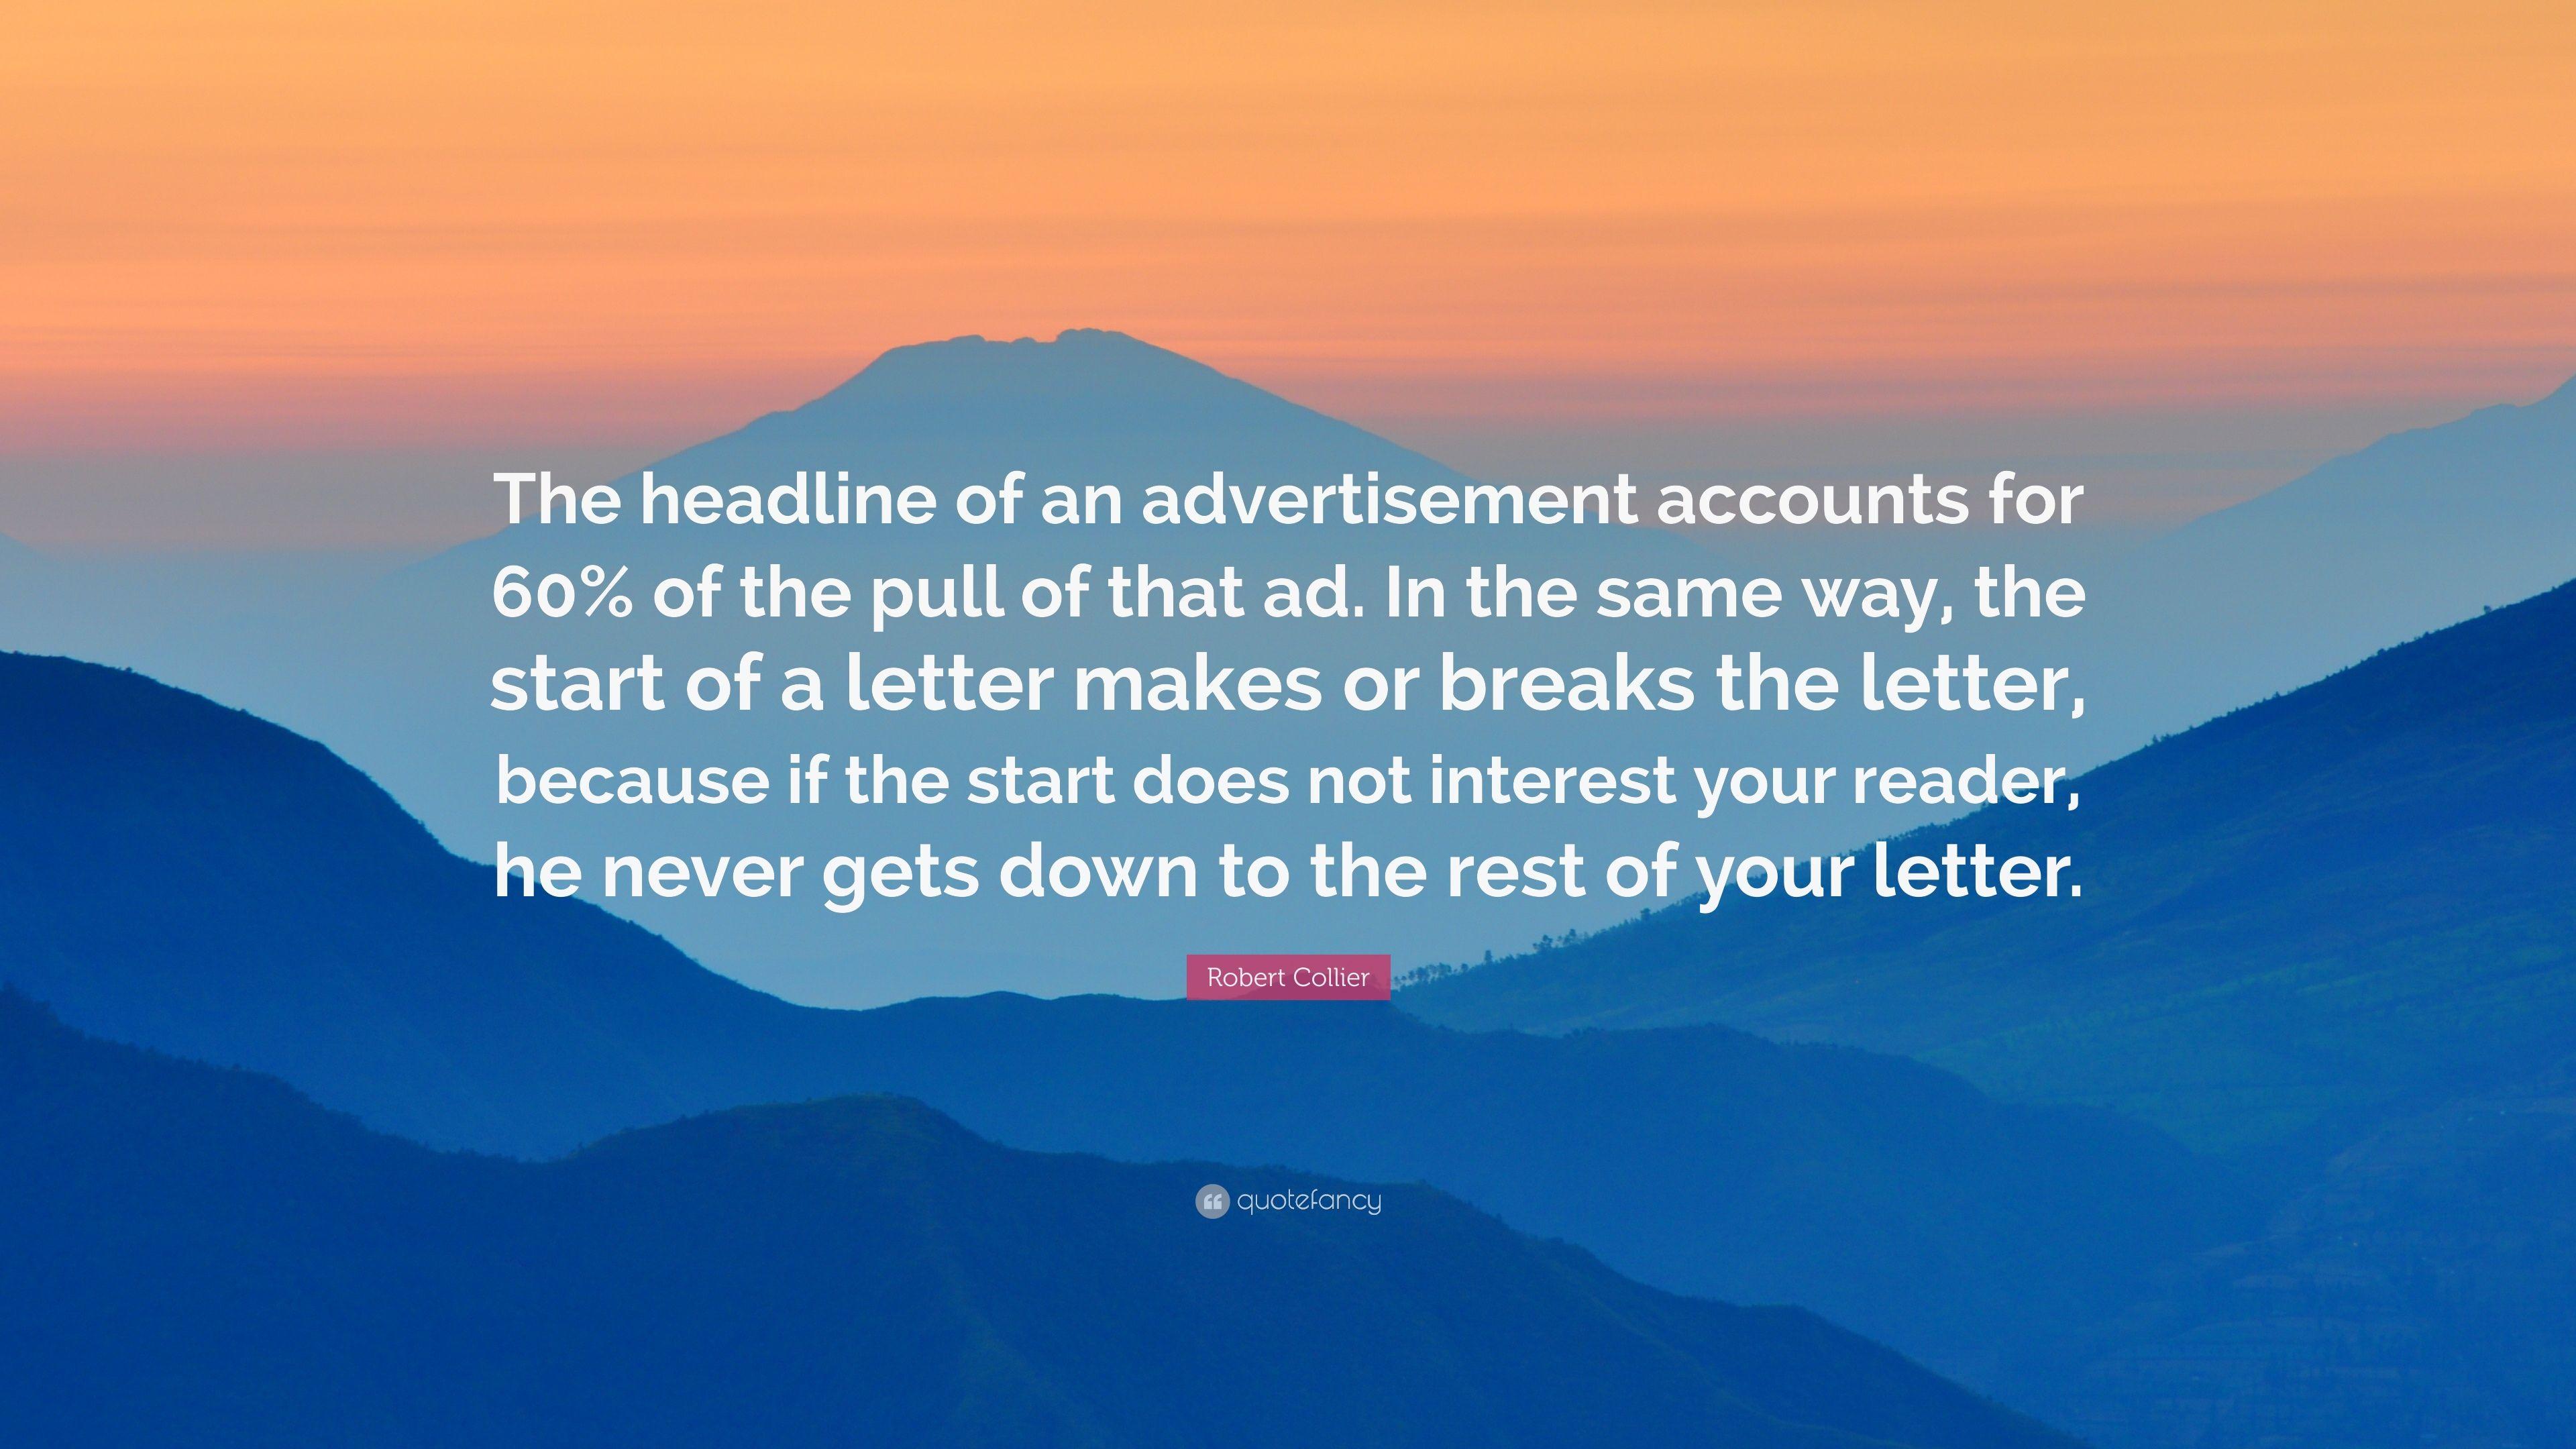 Robert Collier Quote: “The headline of an advertisement accounts